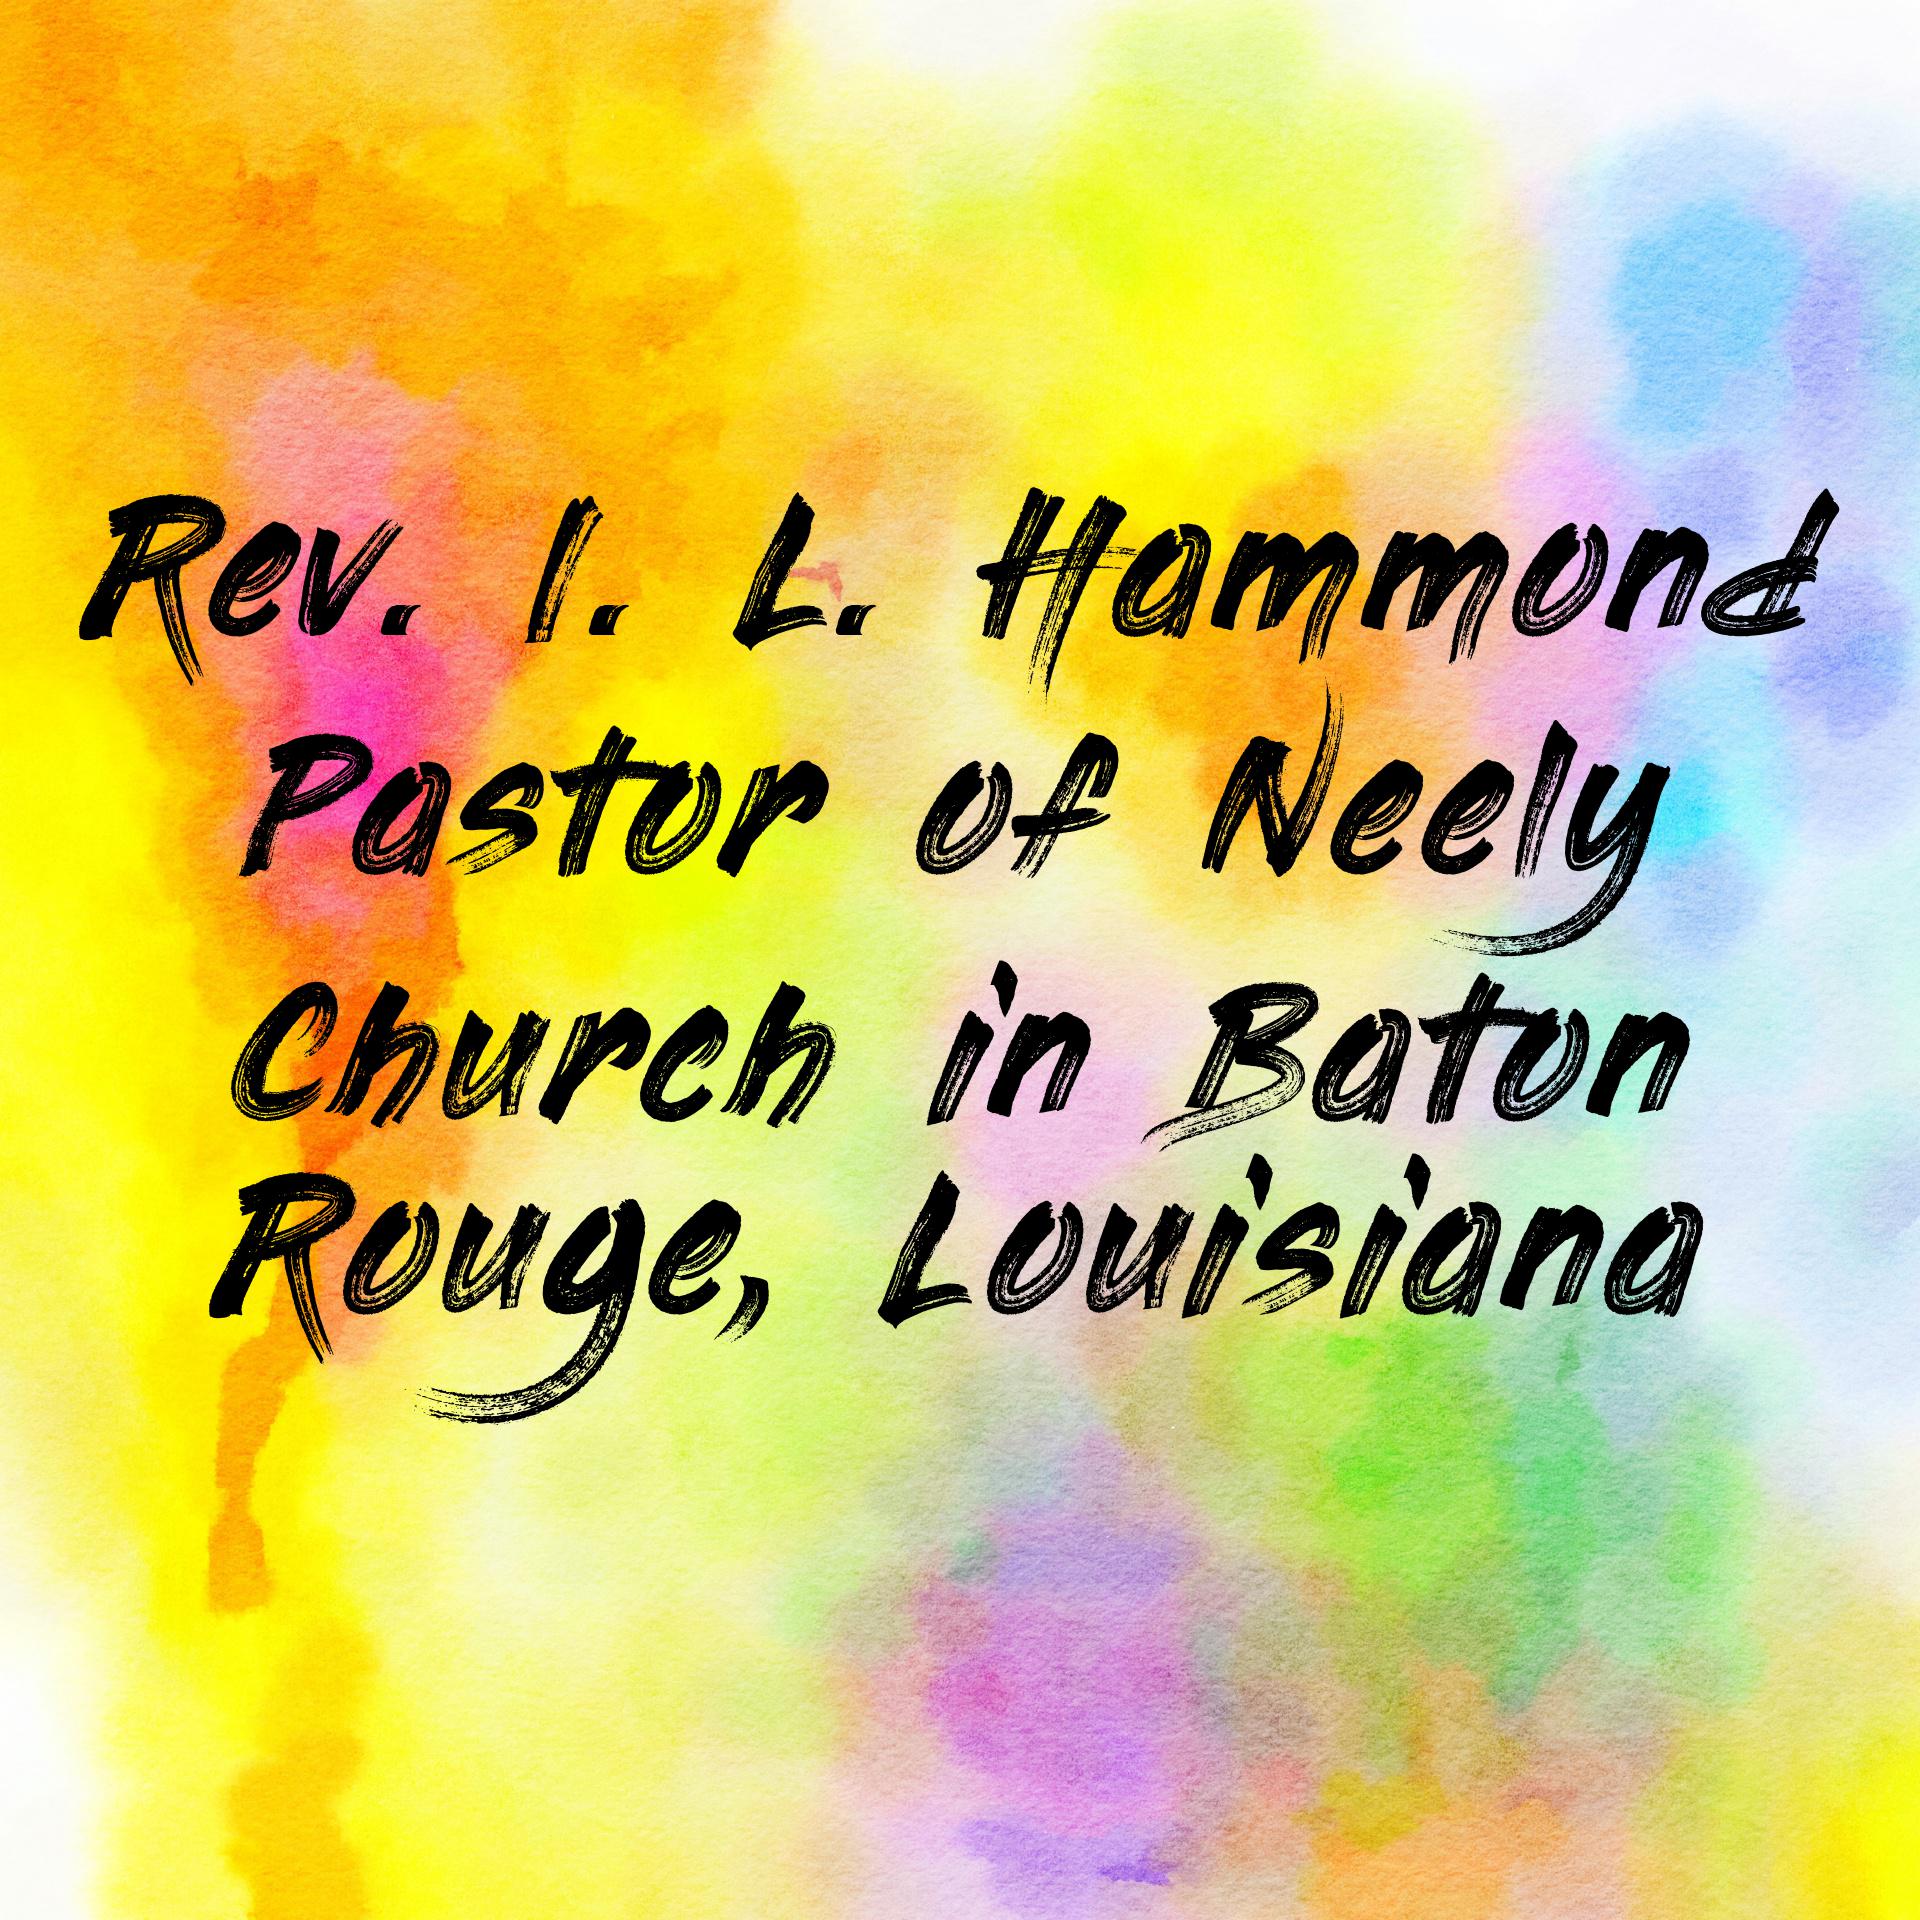 Rev. I. L. Hammond Pastor of Neely Church in Baton Rouge, Louisiana